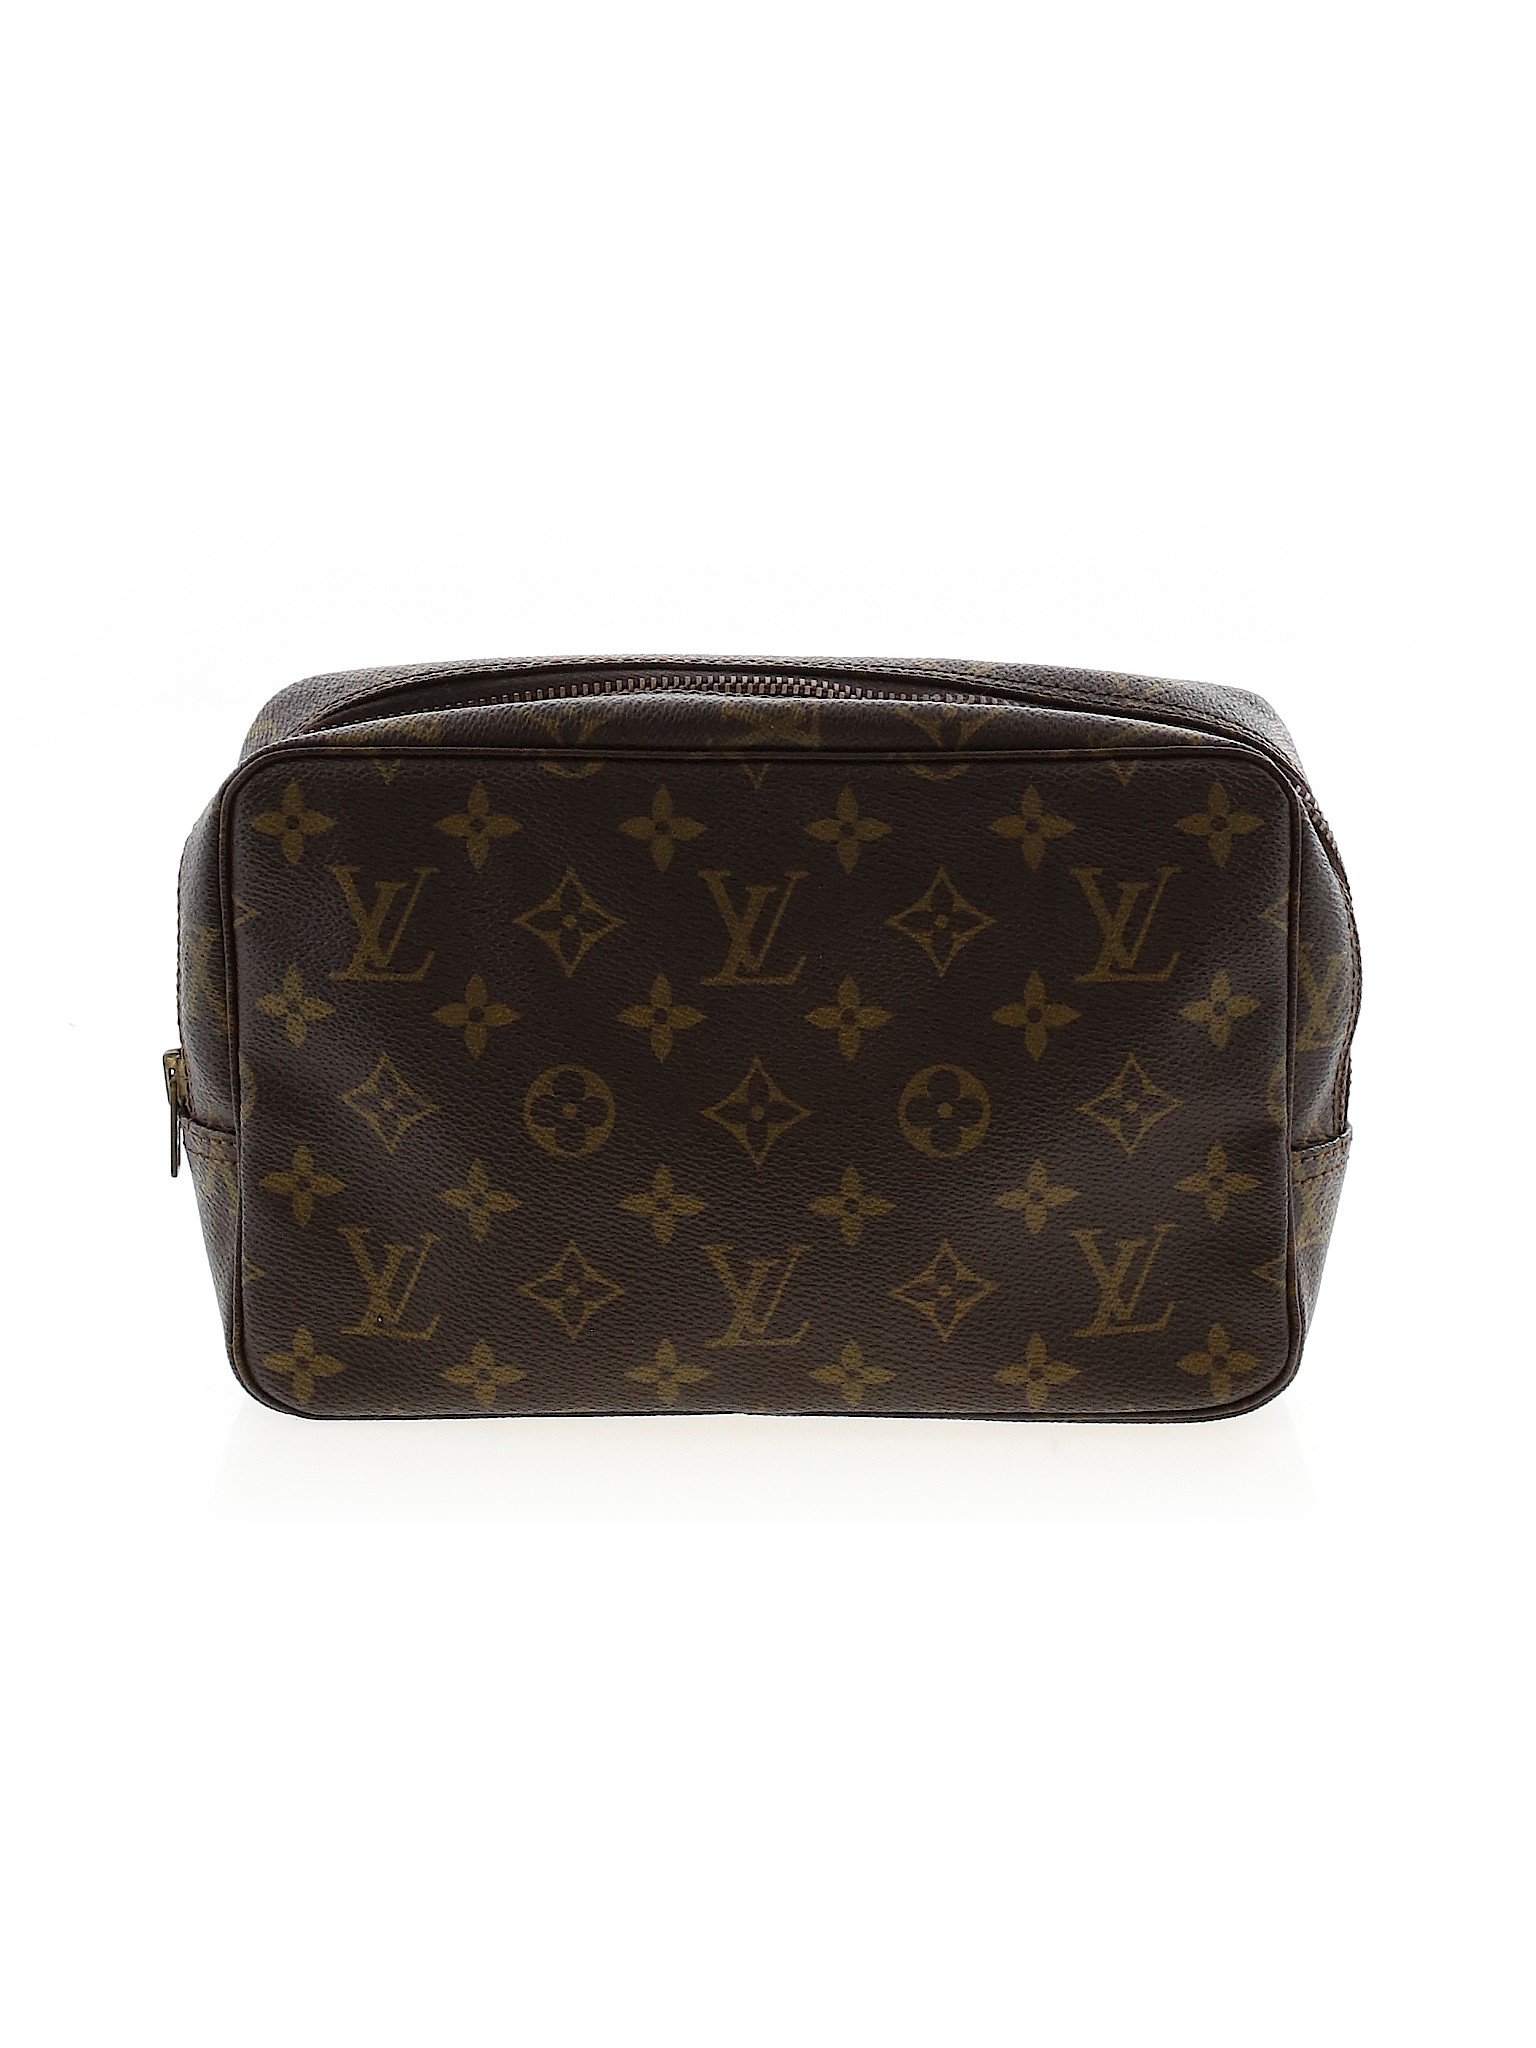 Louis Vuitton Women Brown Makeup Bag One Size | eBay